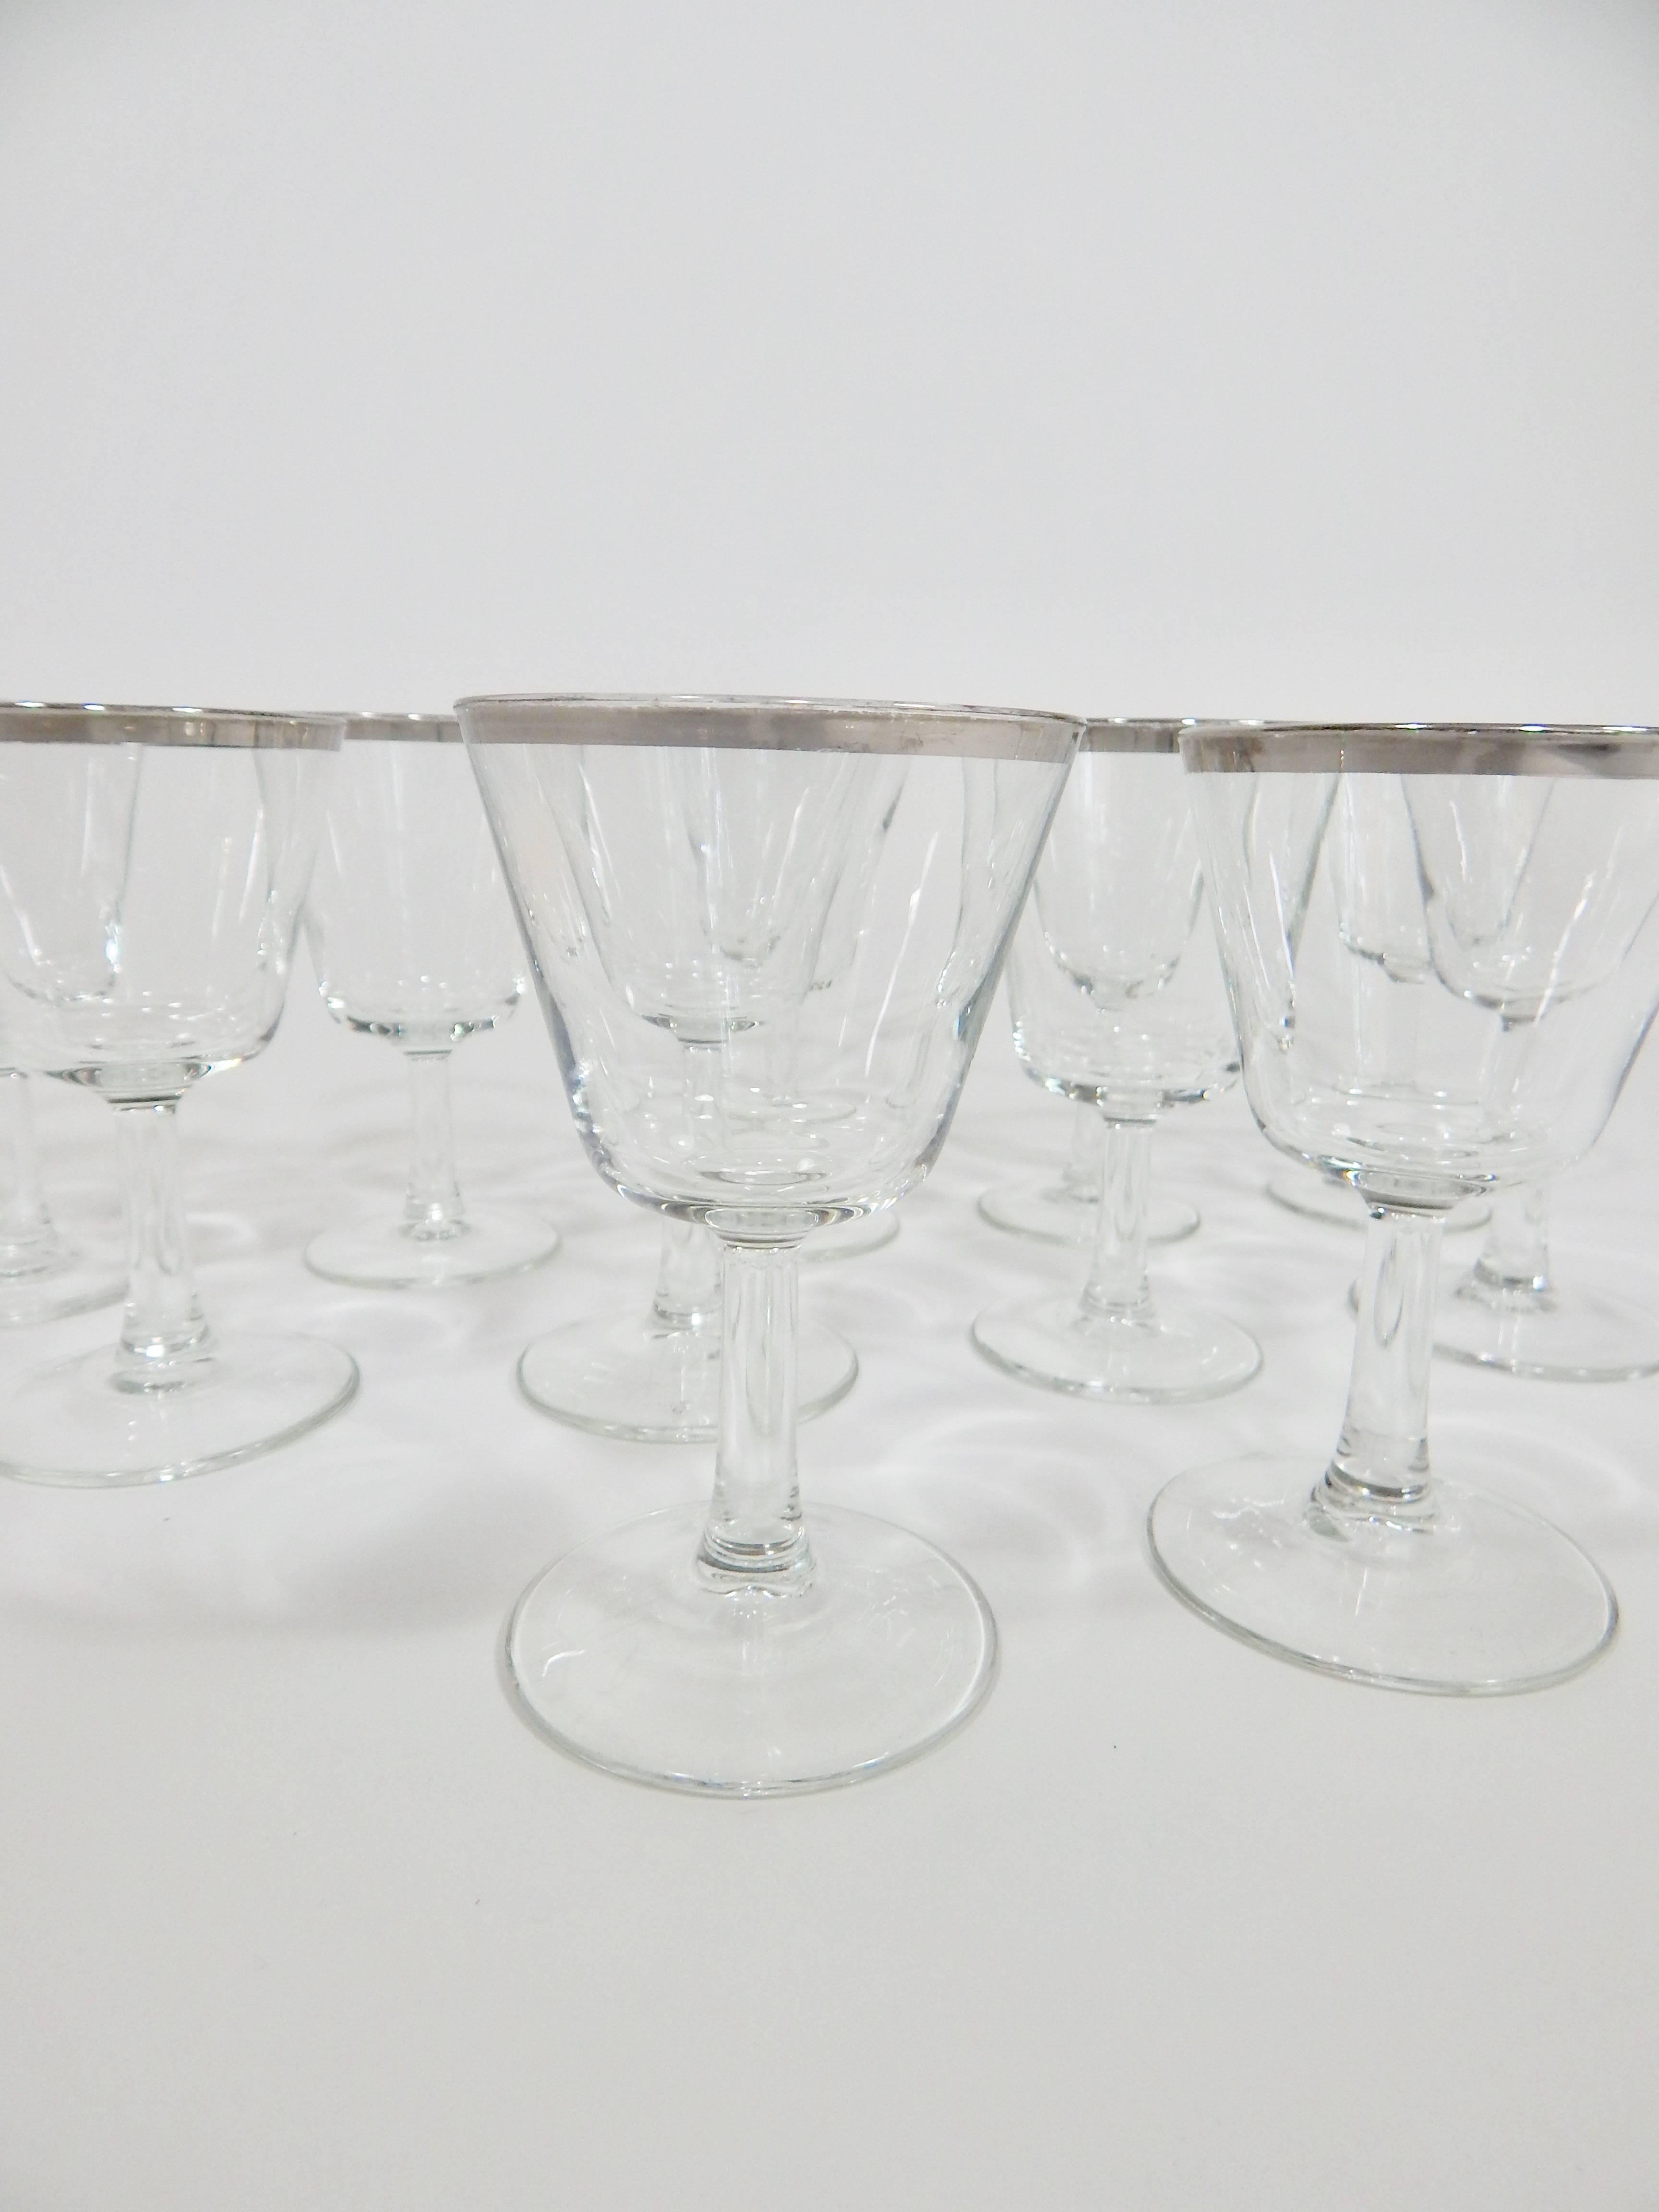 silver rimmed crystal glasses